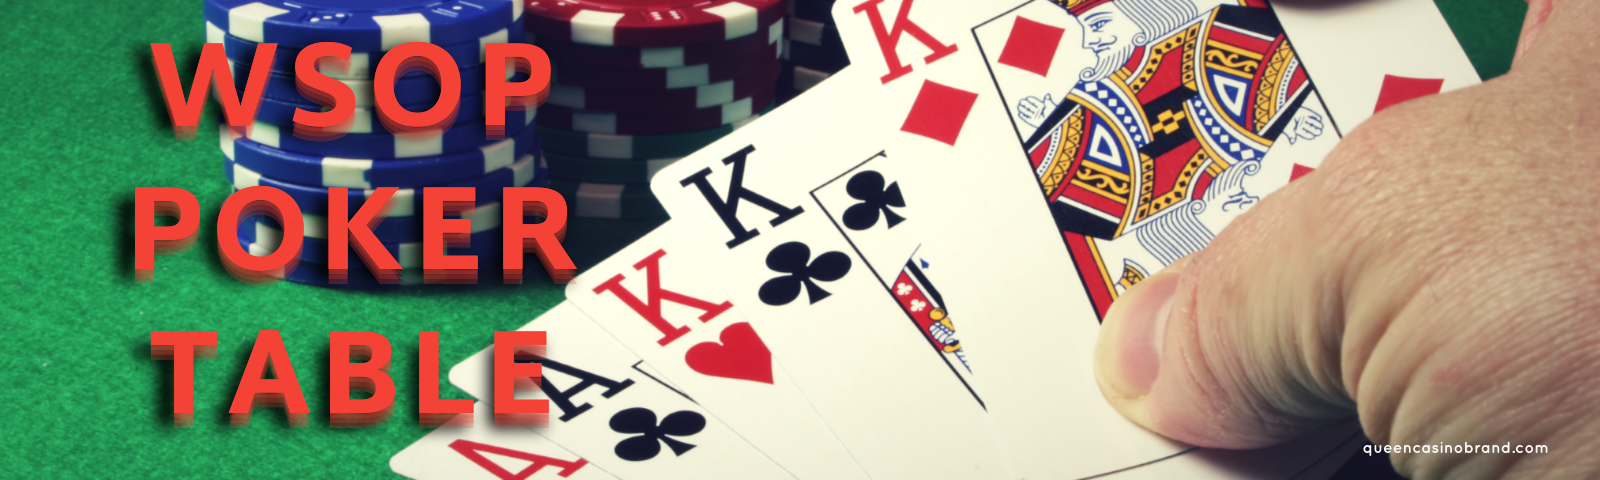 WSOP Poker Table for Pro Tournament | Queen Casino Brand